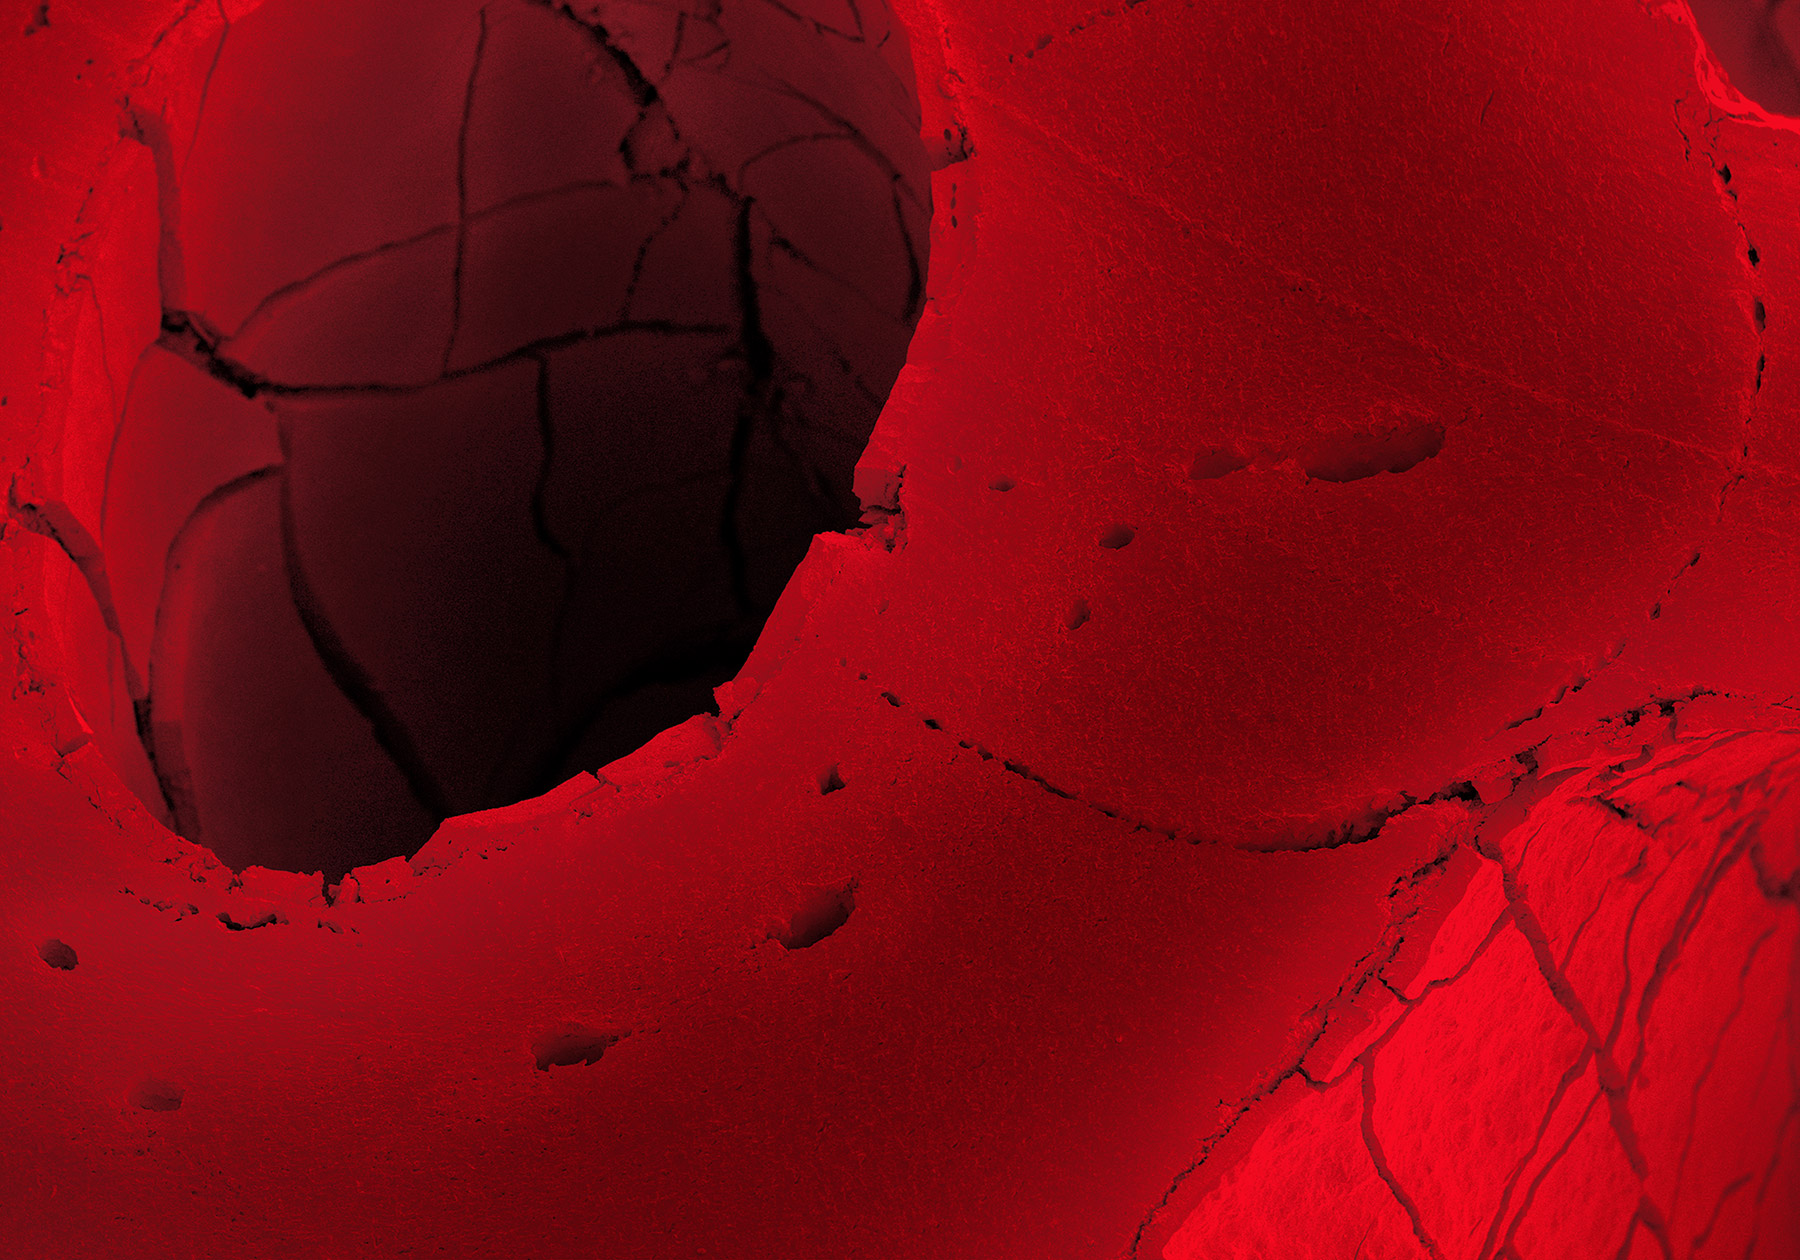  terra cibus no.6: red licorice  20x magnification 